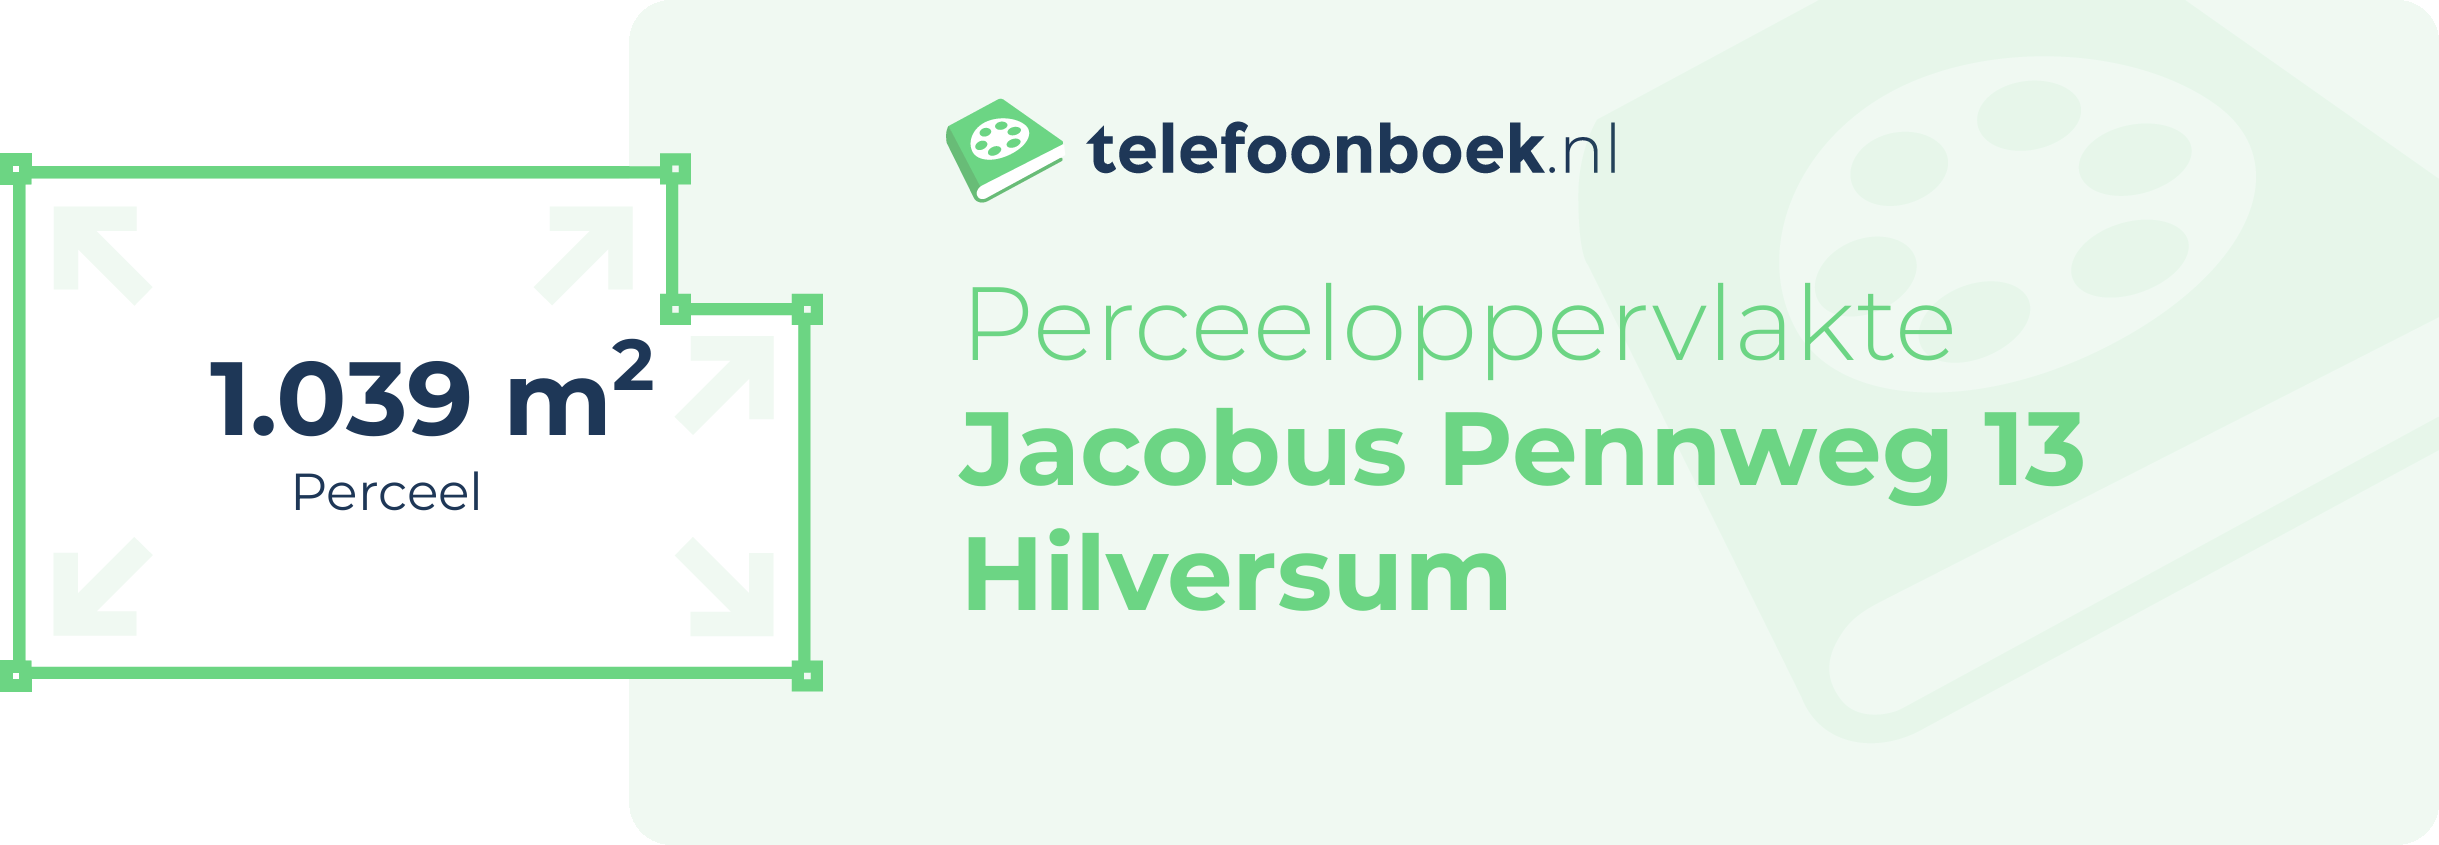 Perceeloppervlakte Jacobus Pennweg 13 Hilversum